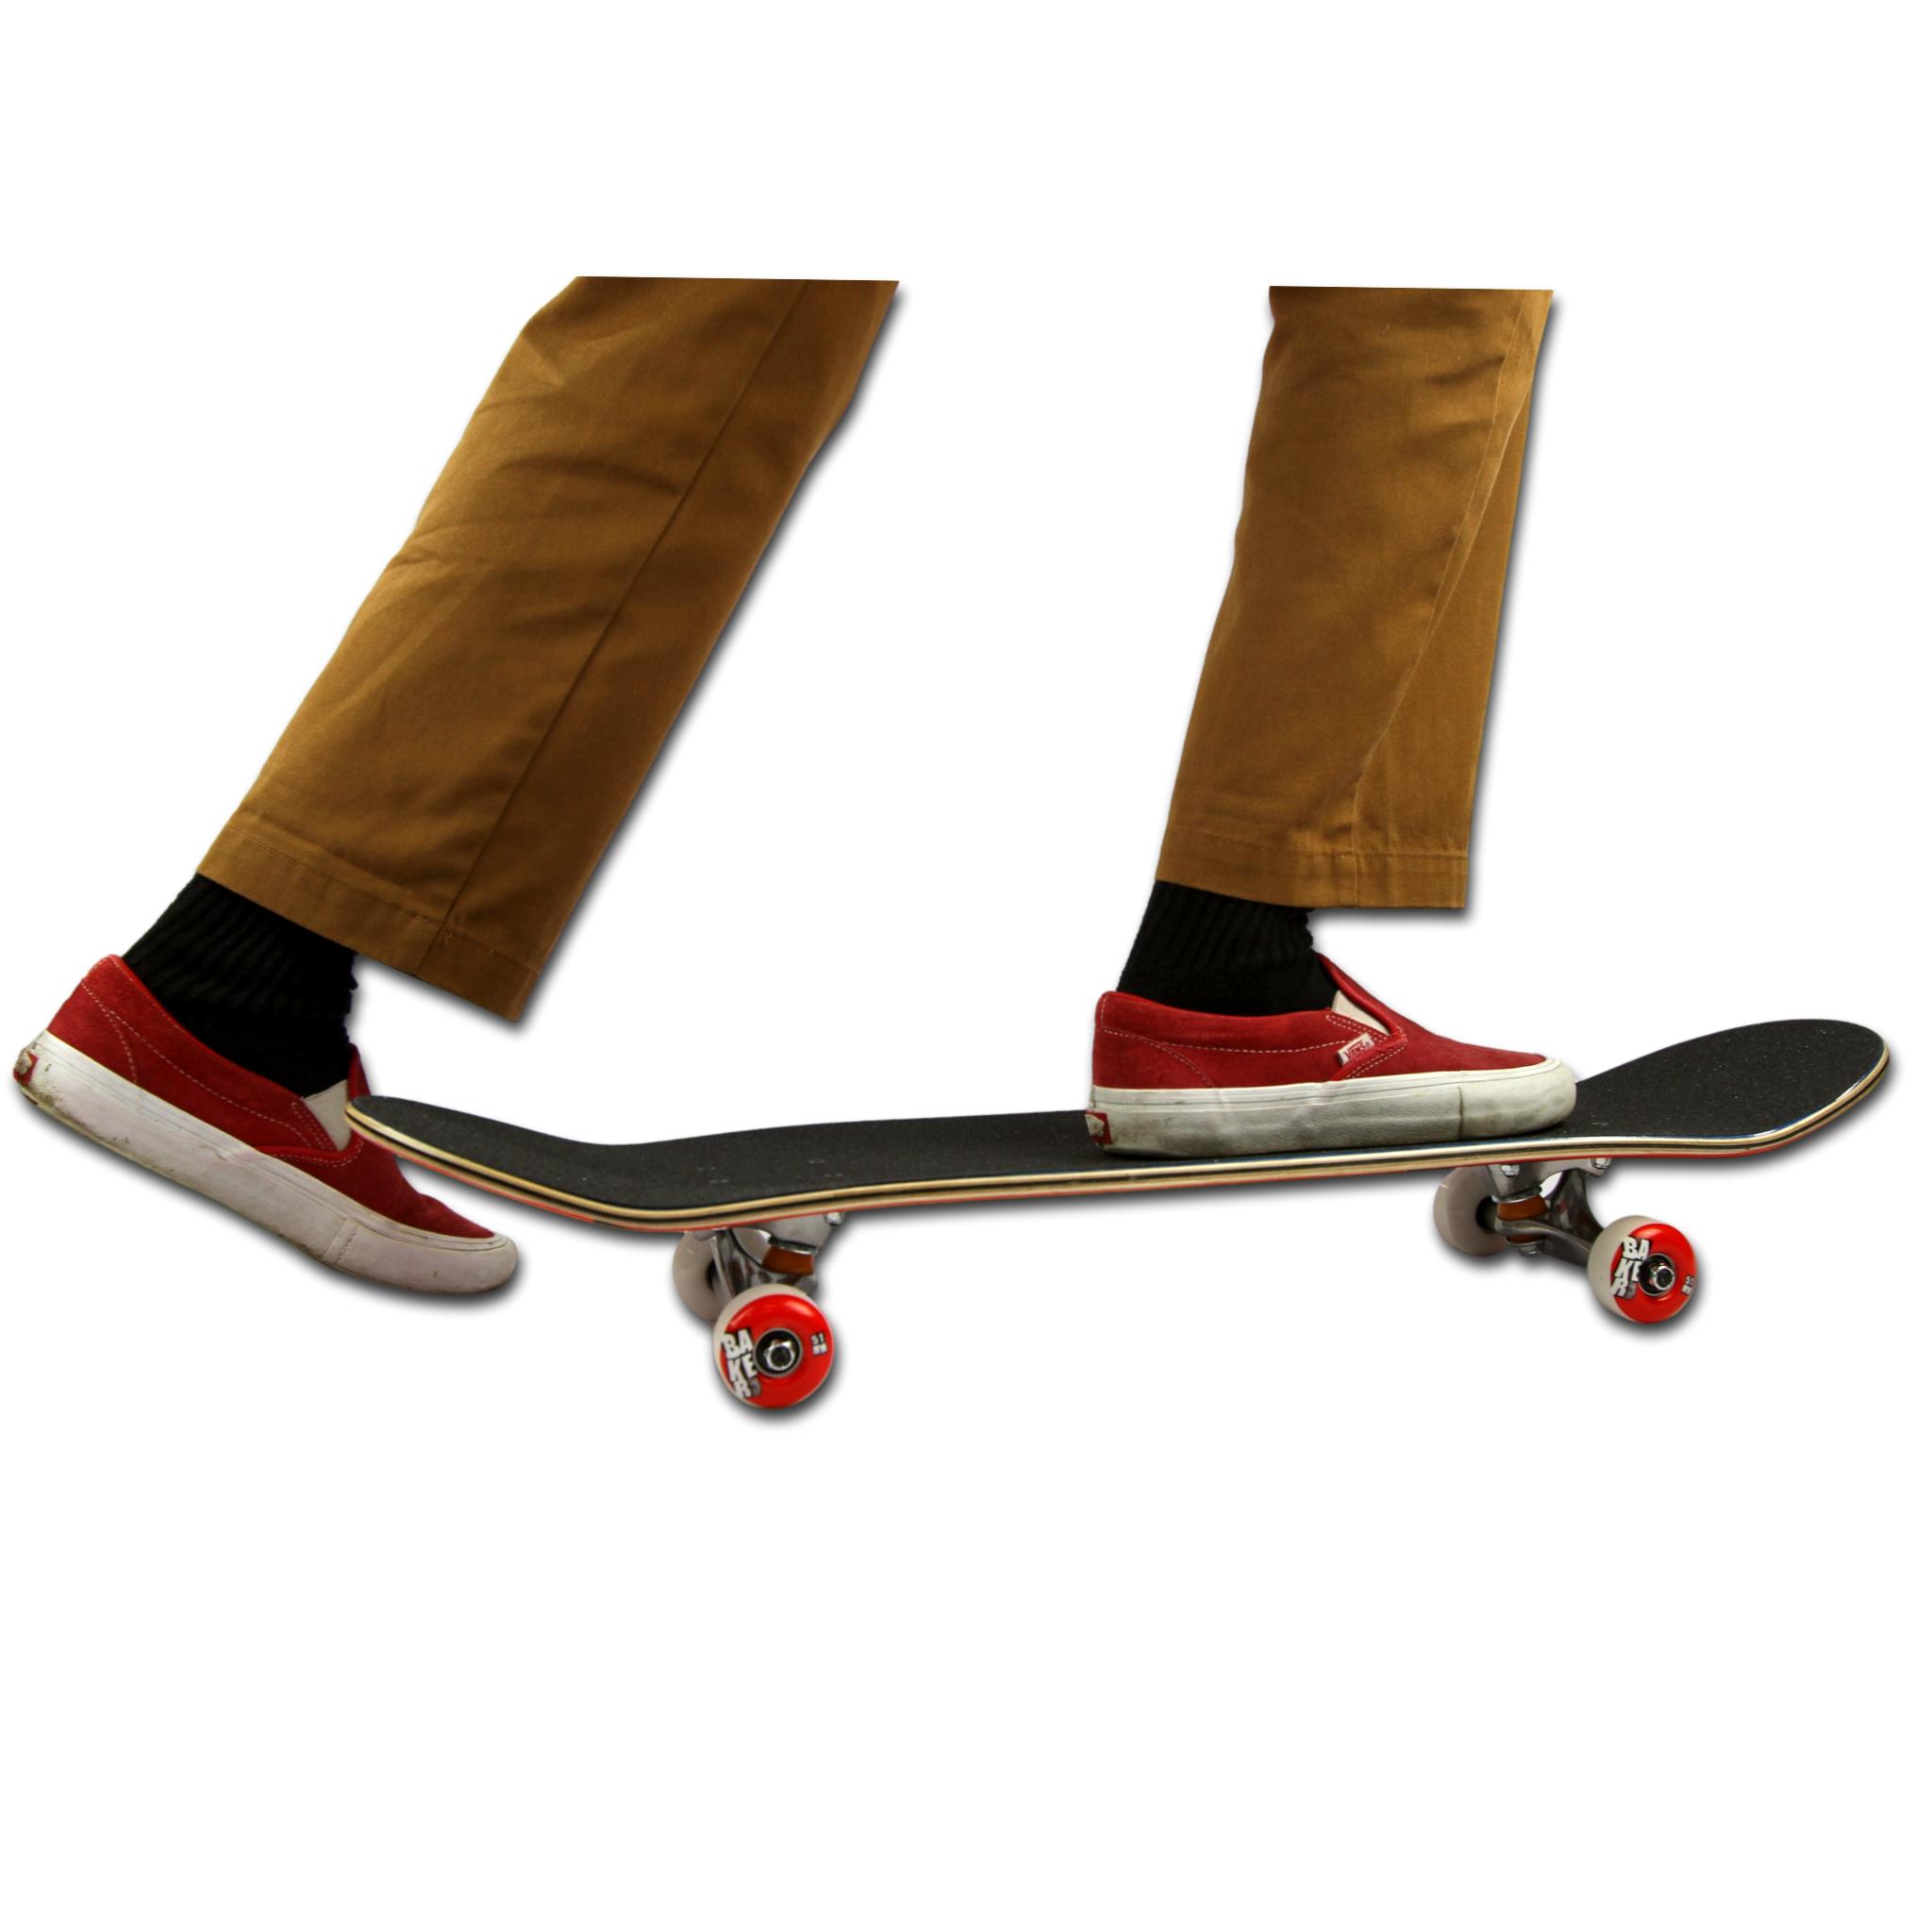 Come andare in skateboard